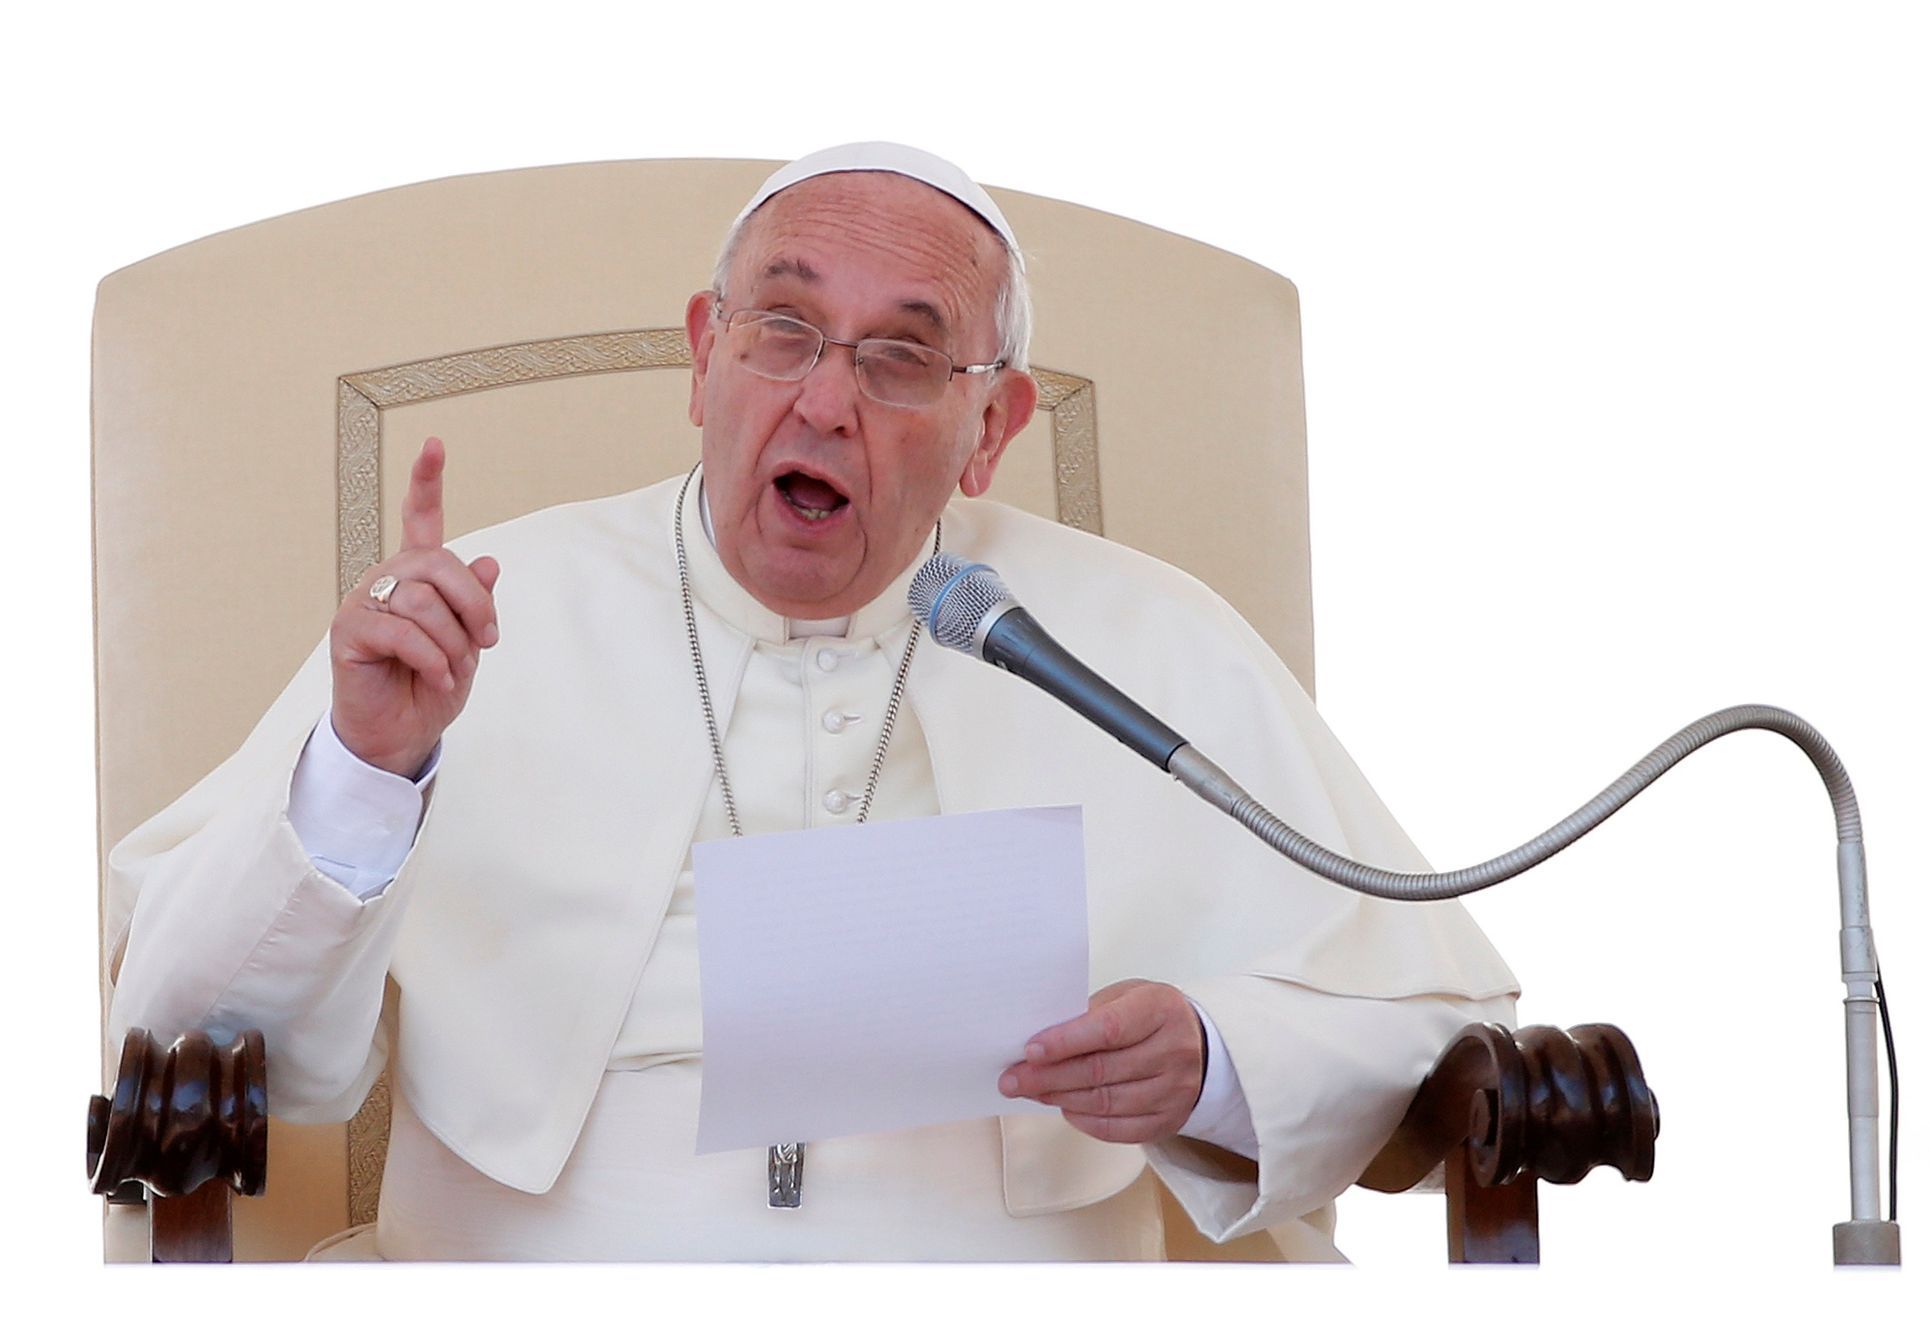 Aiutate l’Italia nella gestione dei rifugiati, papa Francesco esorta l’Europa